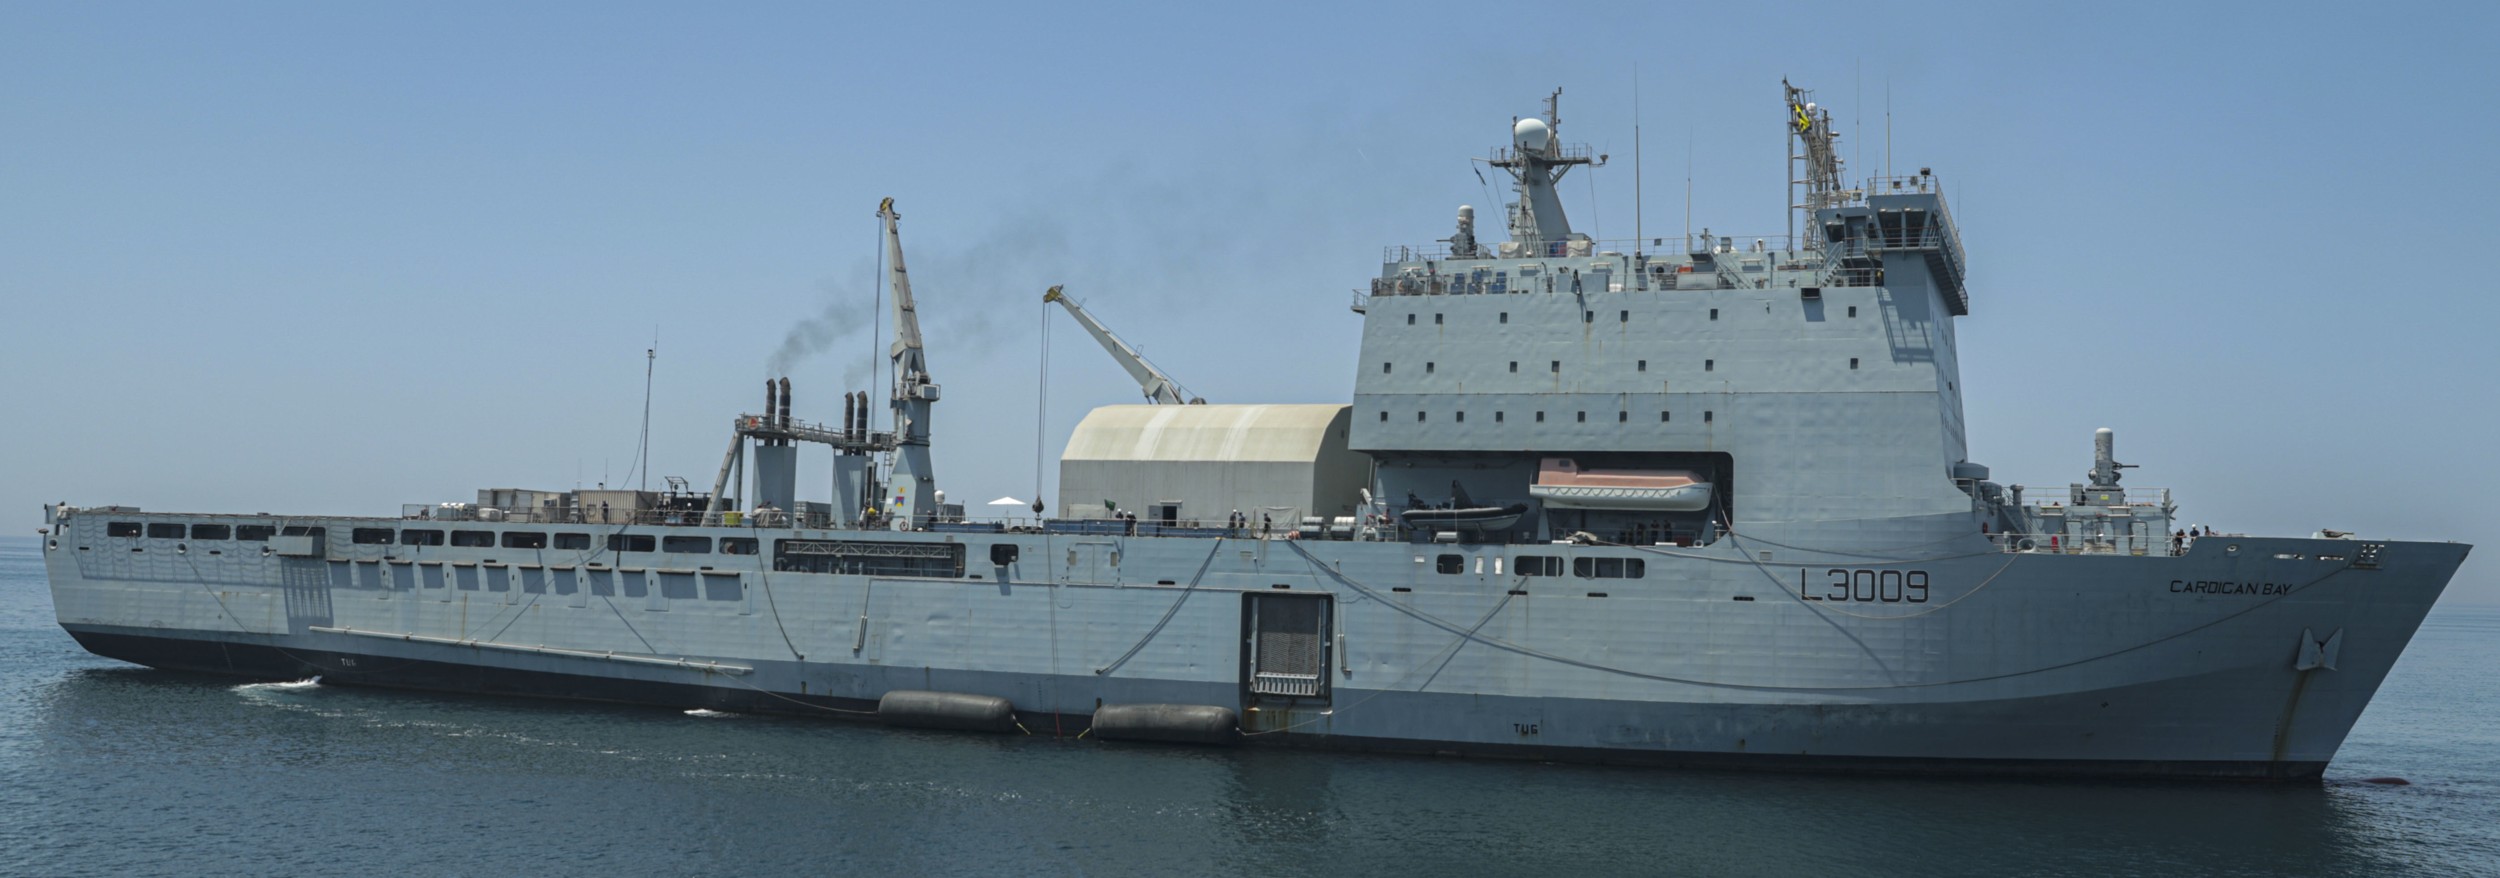 l-3009 rfa cardigan bay dock landing ship lsd royal fleet auxilary navy 23